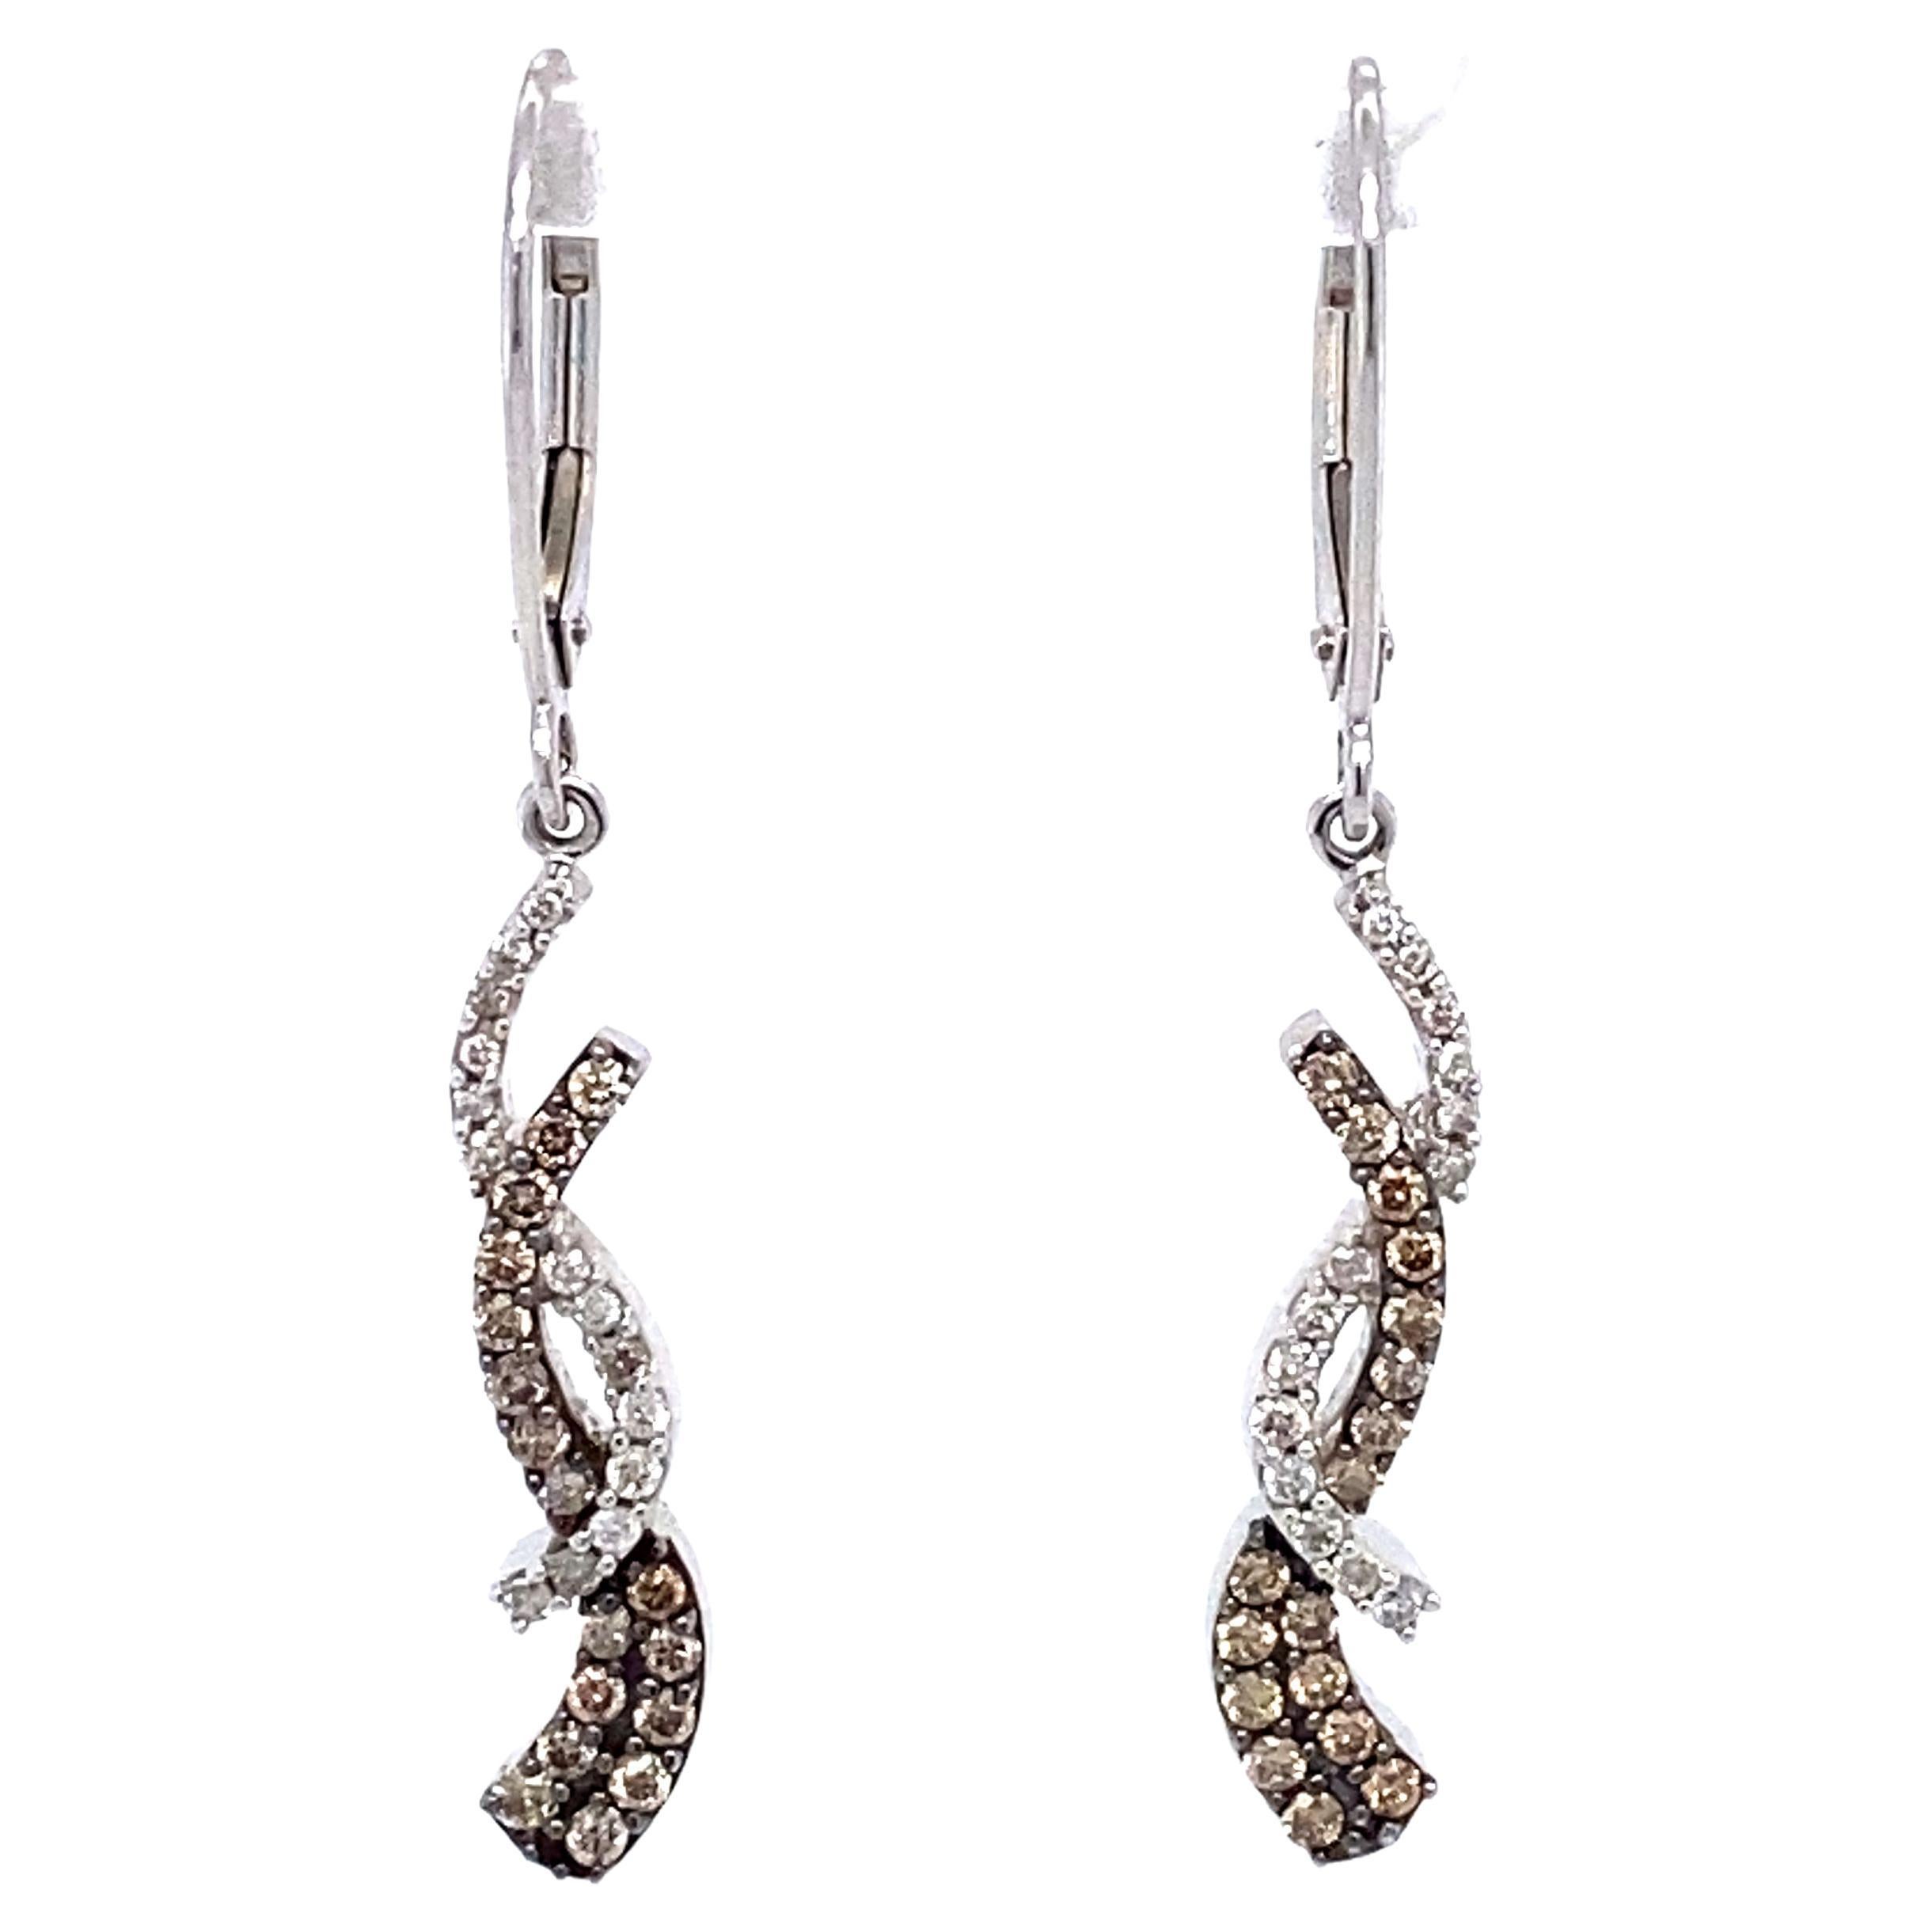 0.25 Carat White and Brown Diamond Twist Chandelier Earrings in 14 Karat Gold For Sale